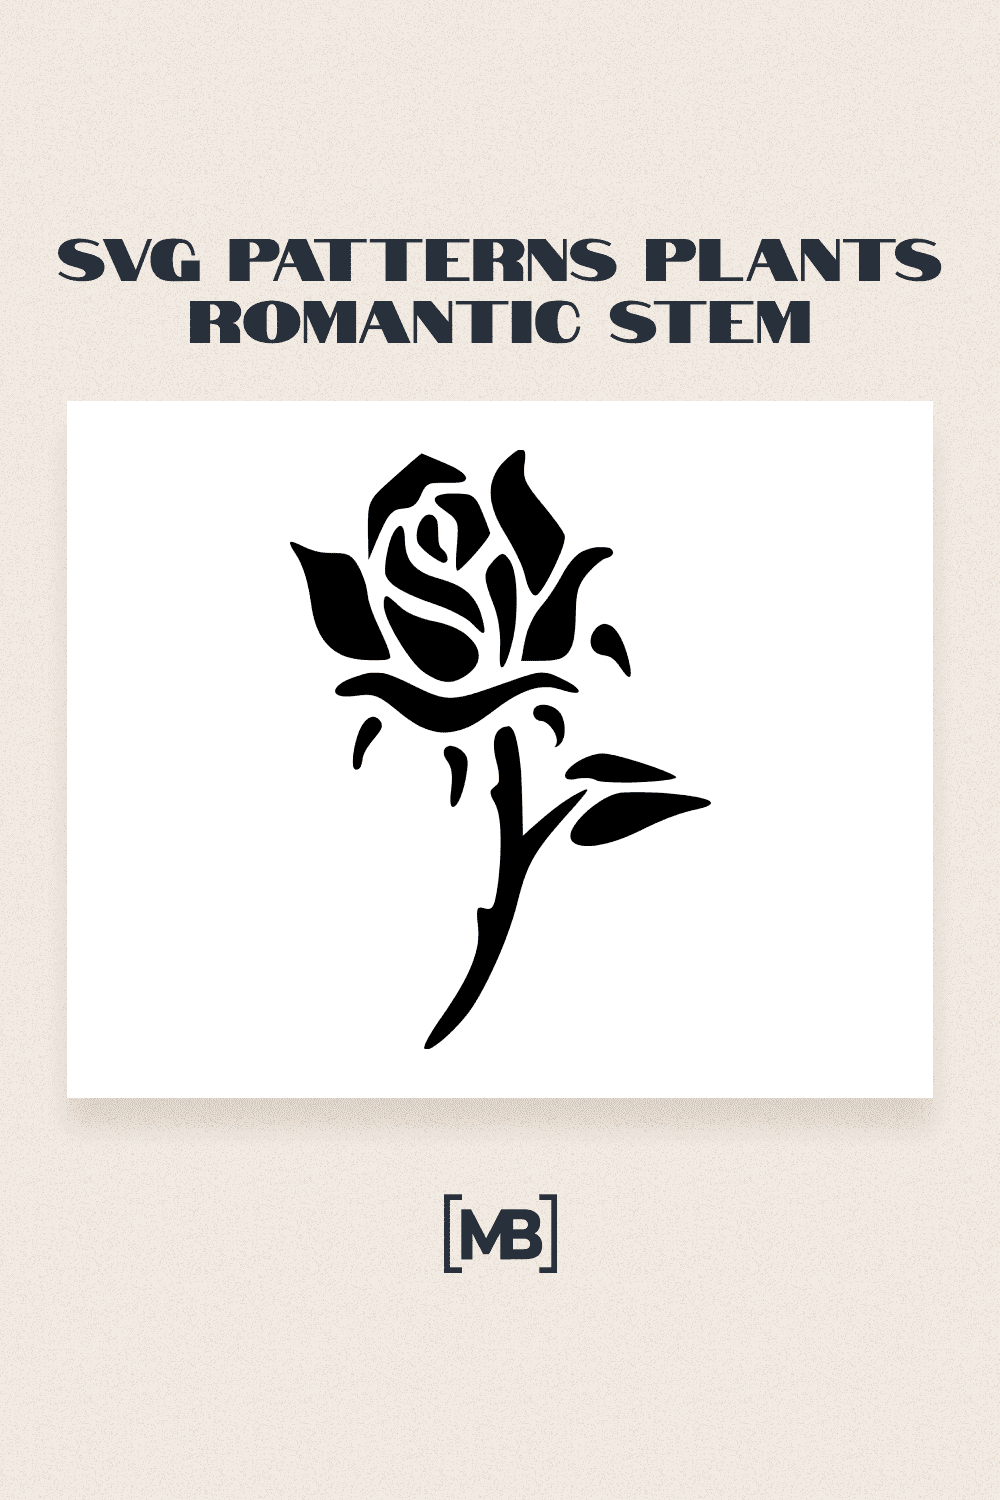 SVG patterns plants romantic stem.